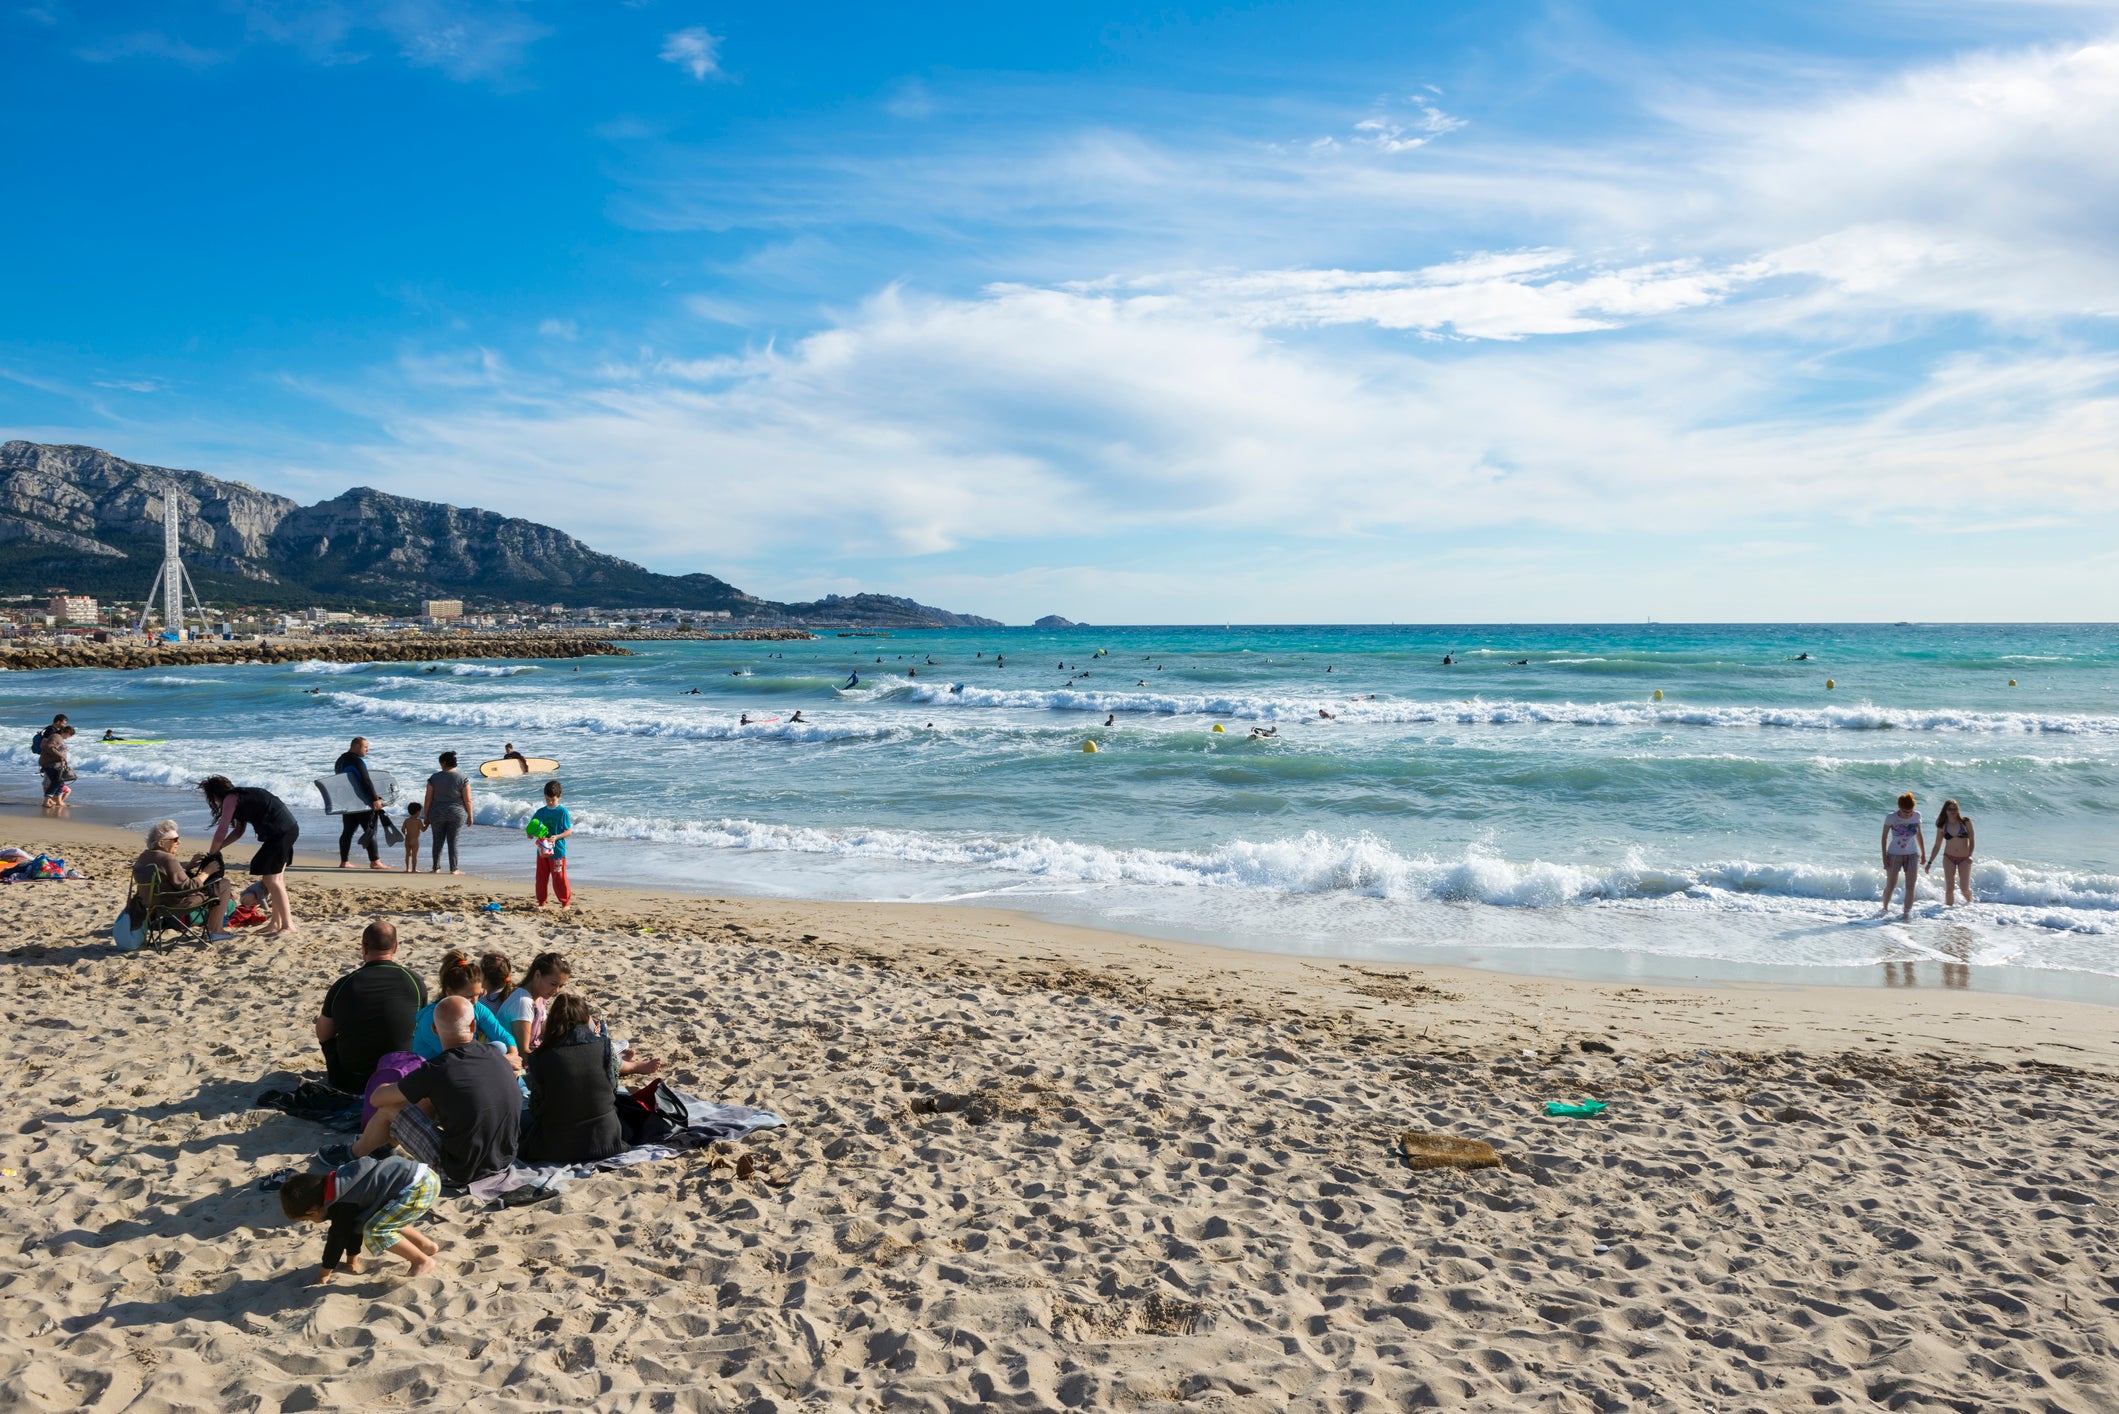 Marseille has two sandy beaches